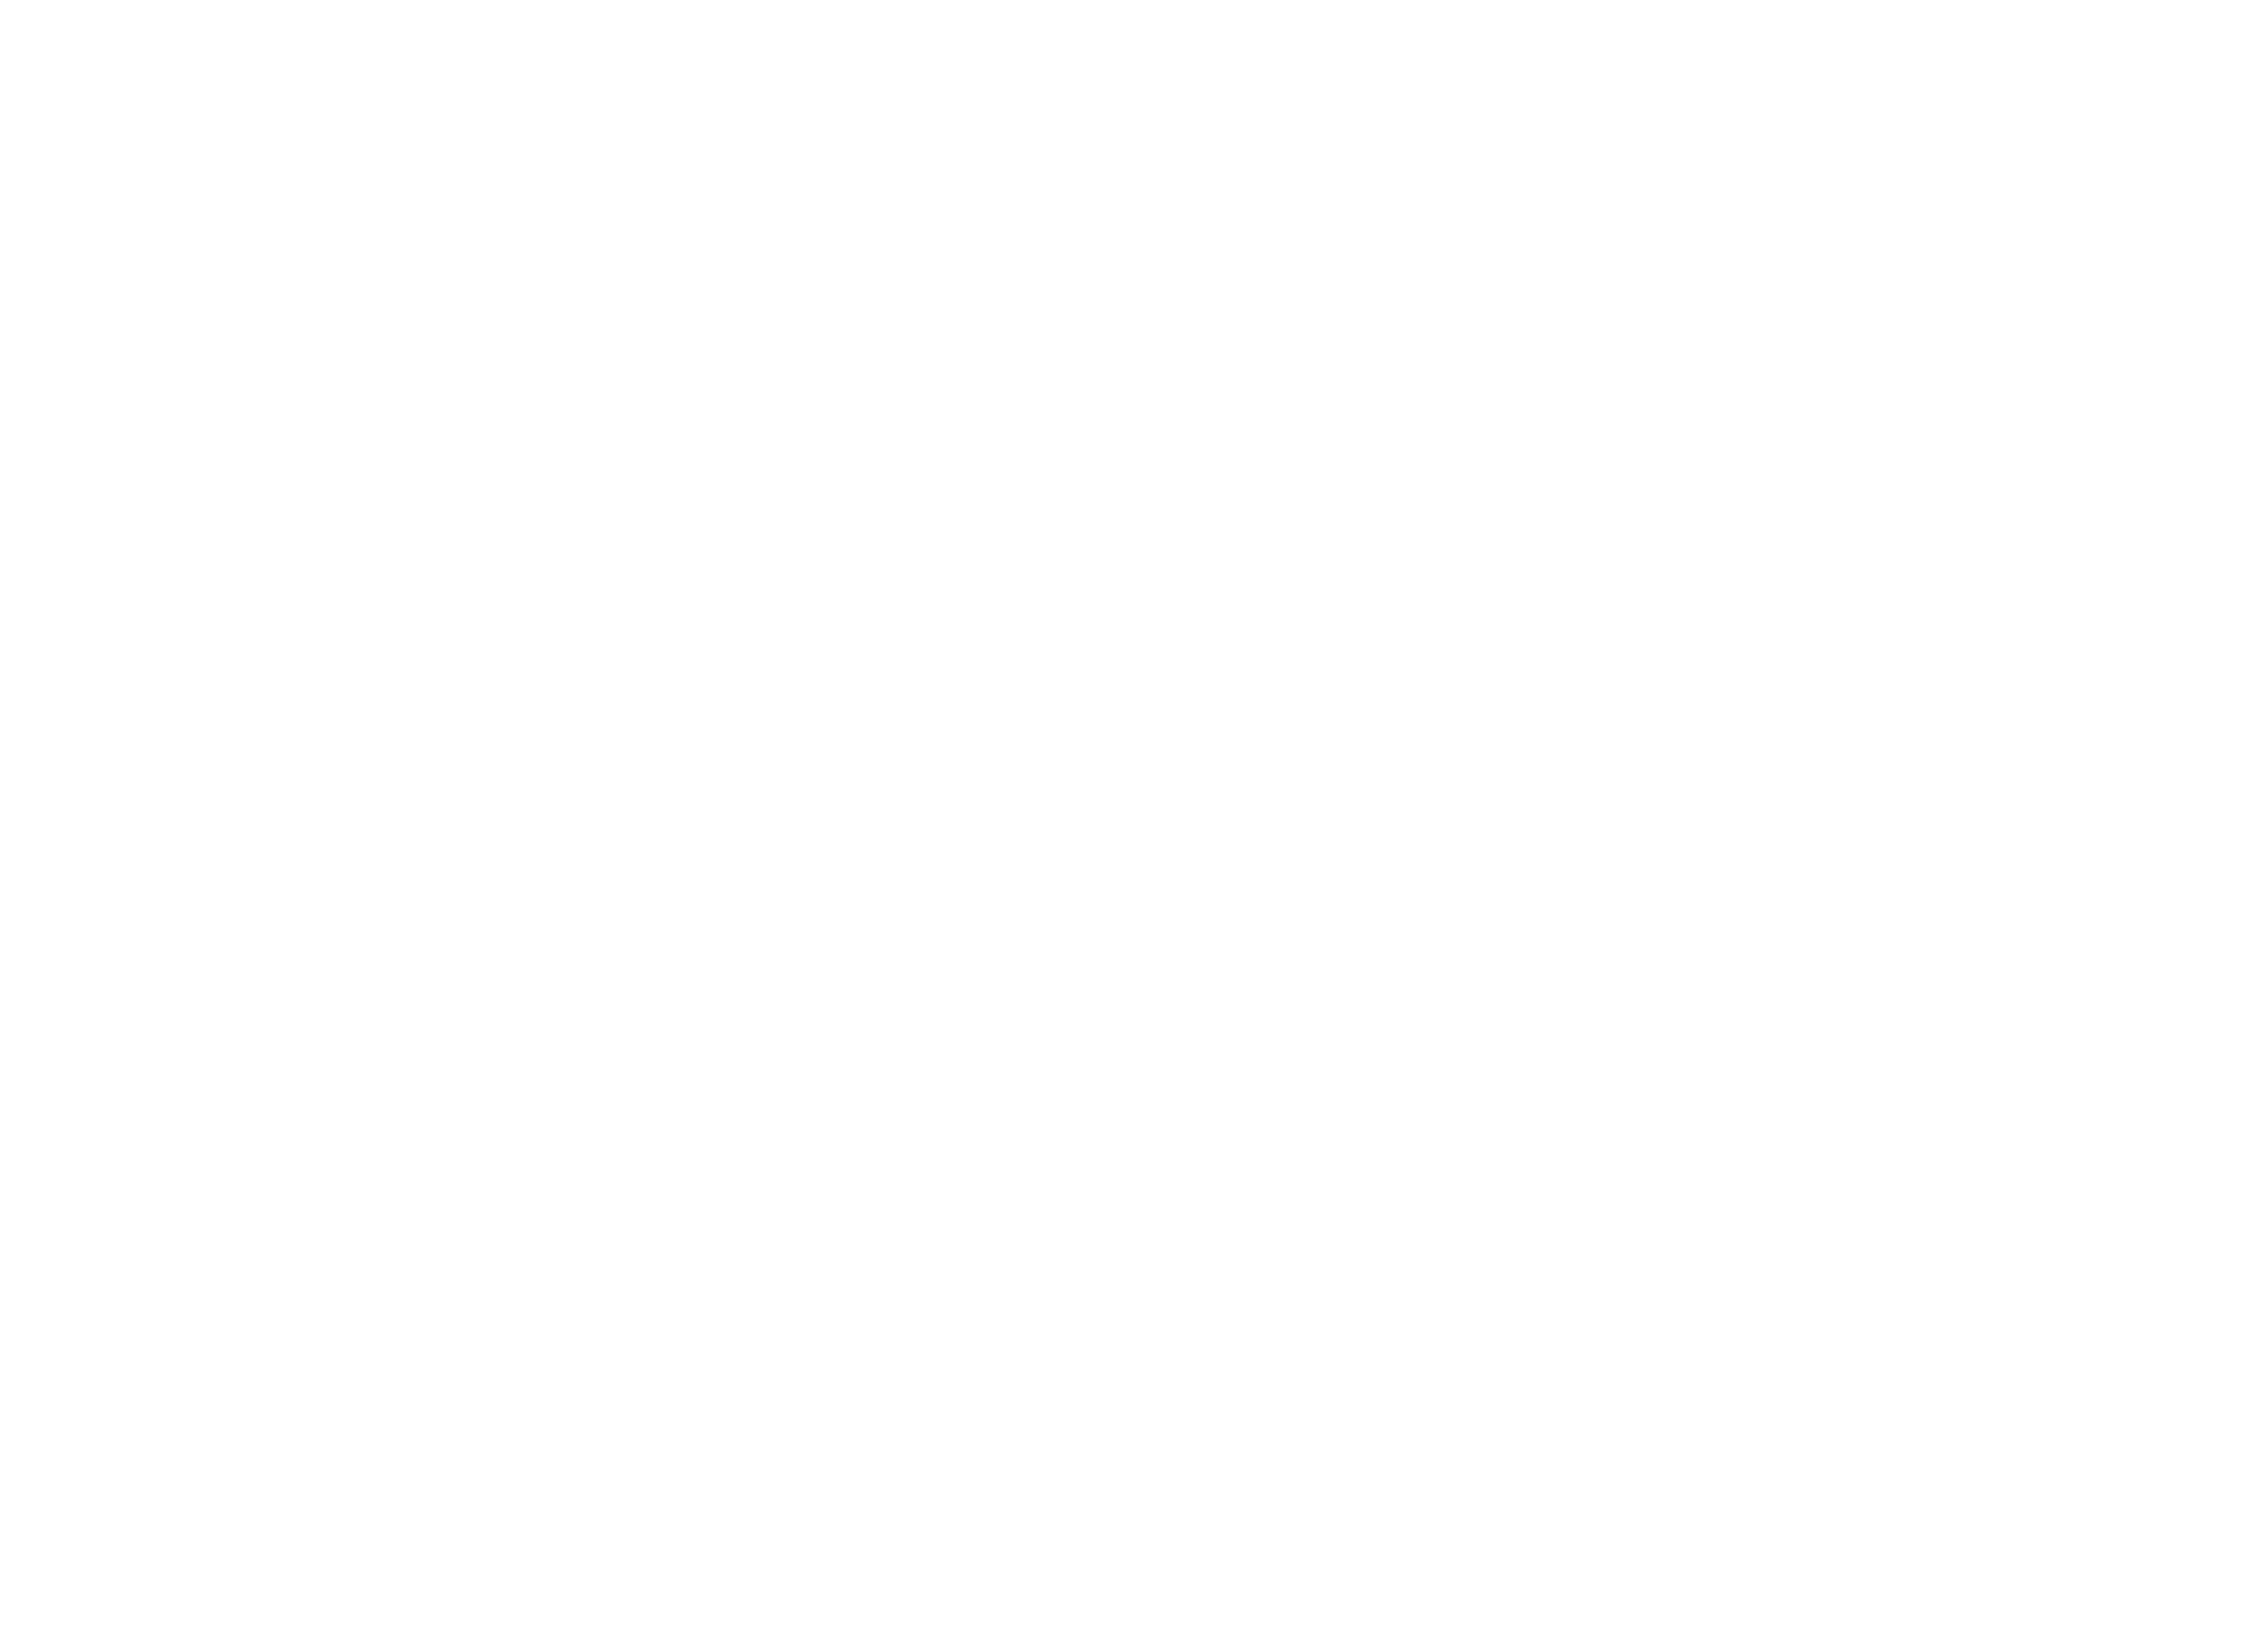 is sierra leone a tourist destination